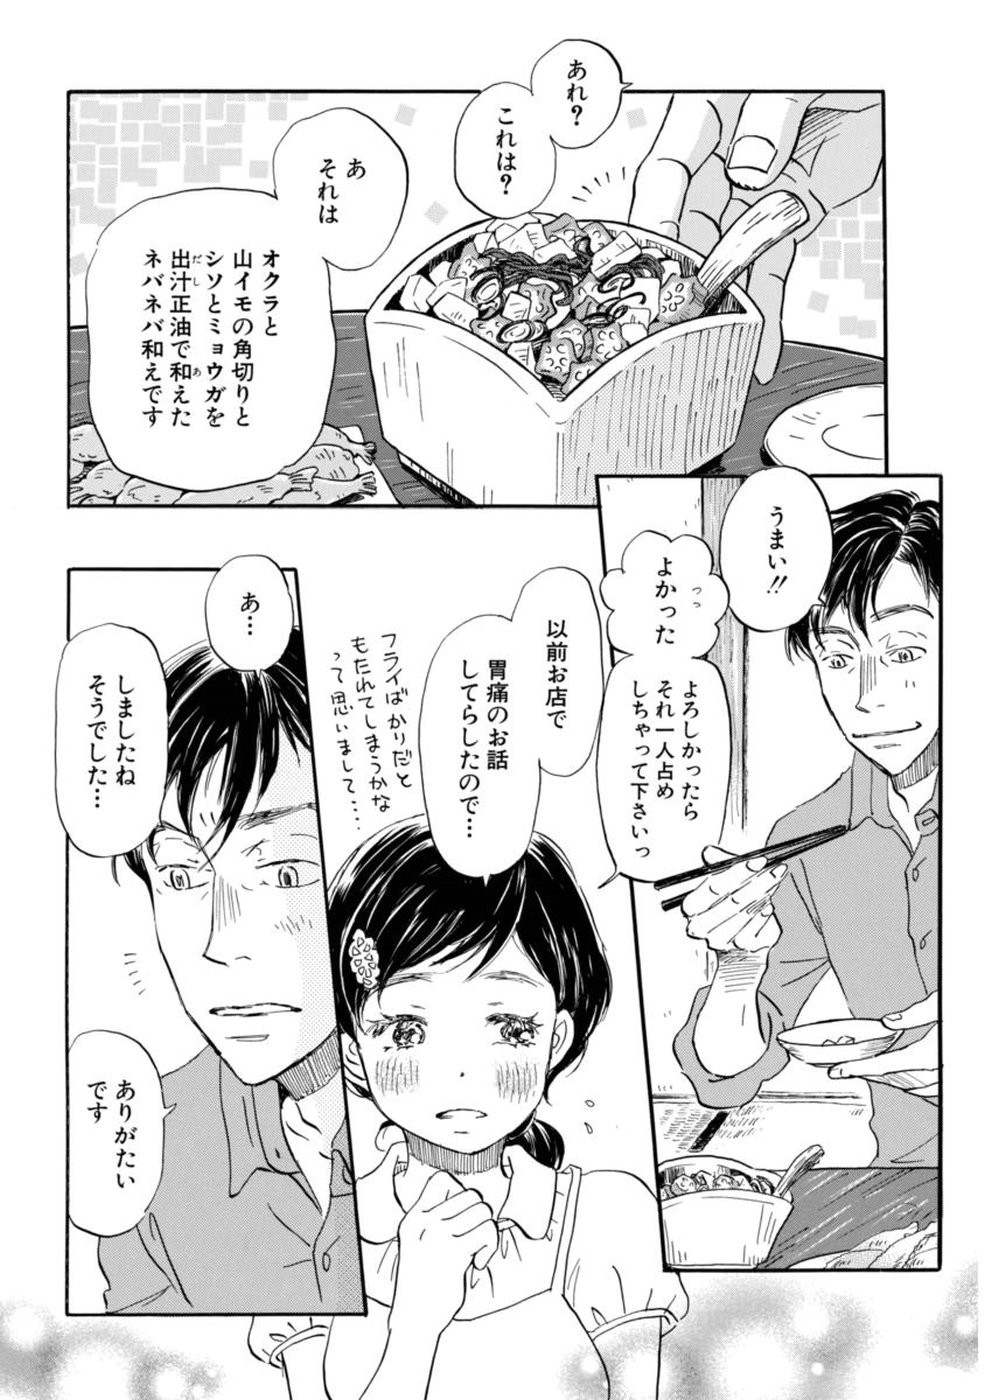 3 Gatsu no Lion - Chapter 146 - Page 10